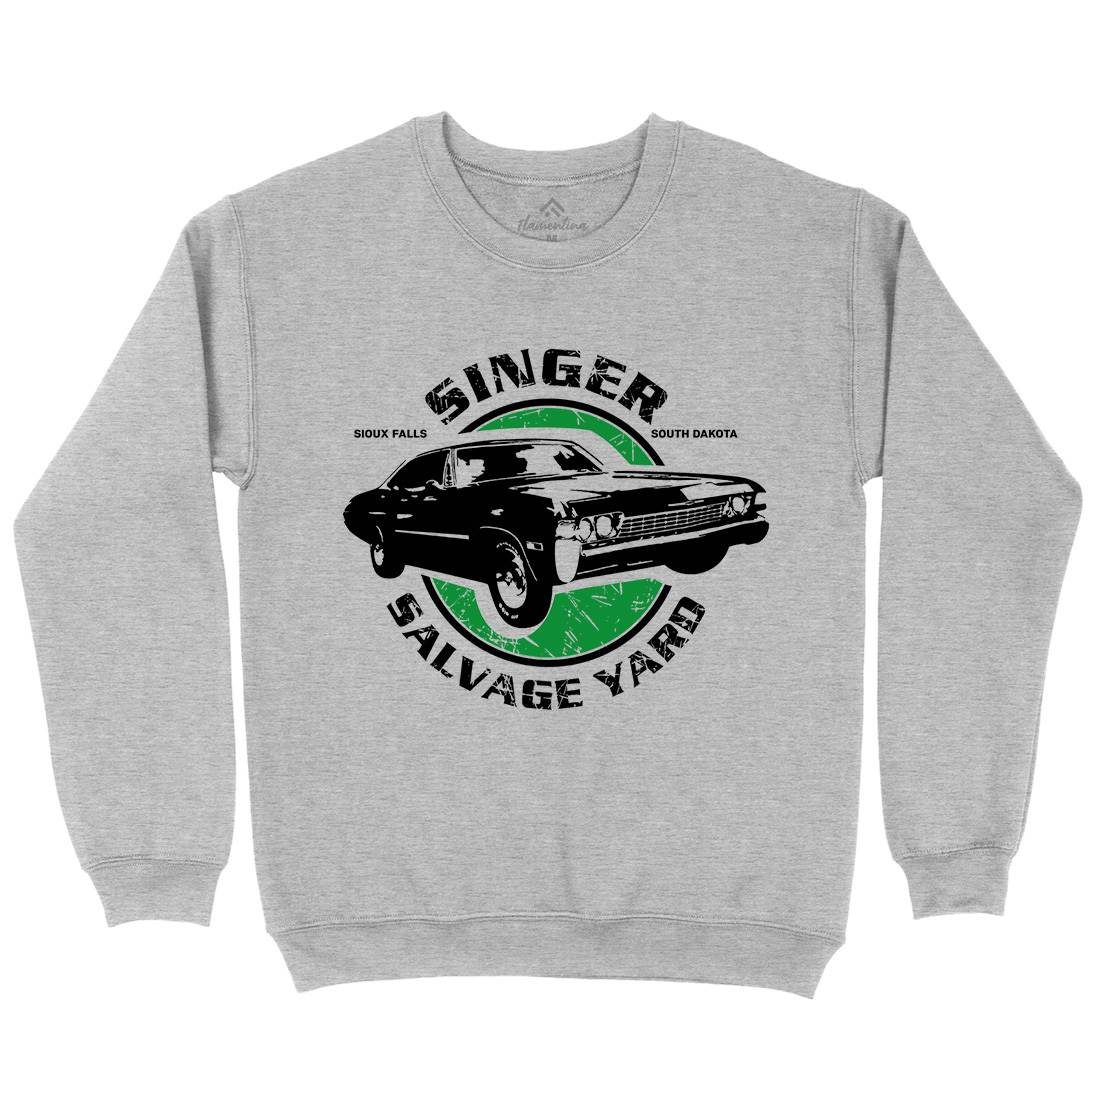 Singer Salvage Yard Mens Crew Neck Sweatshirt Cars D377